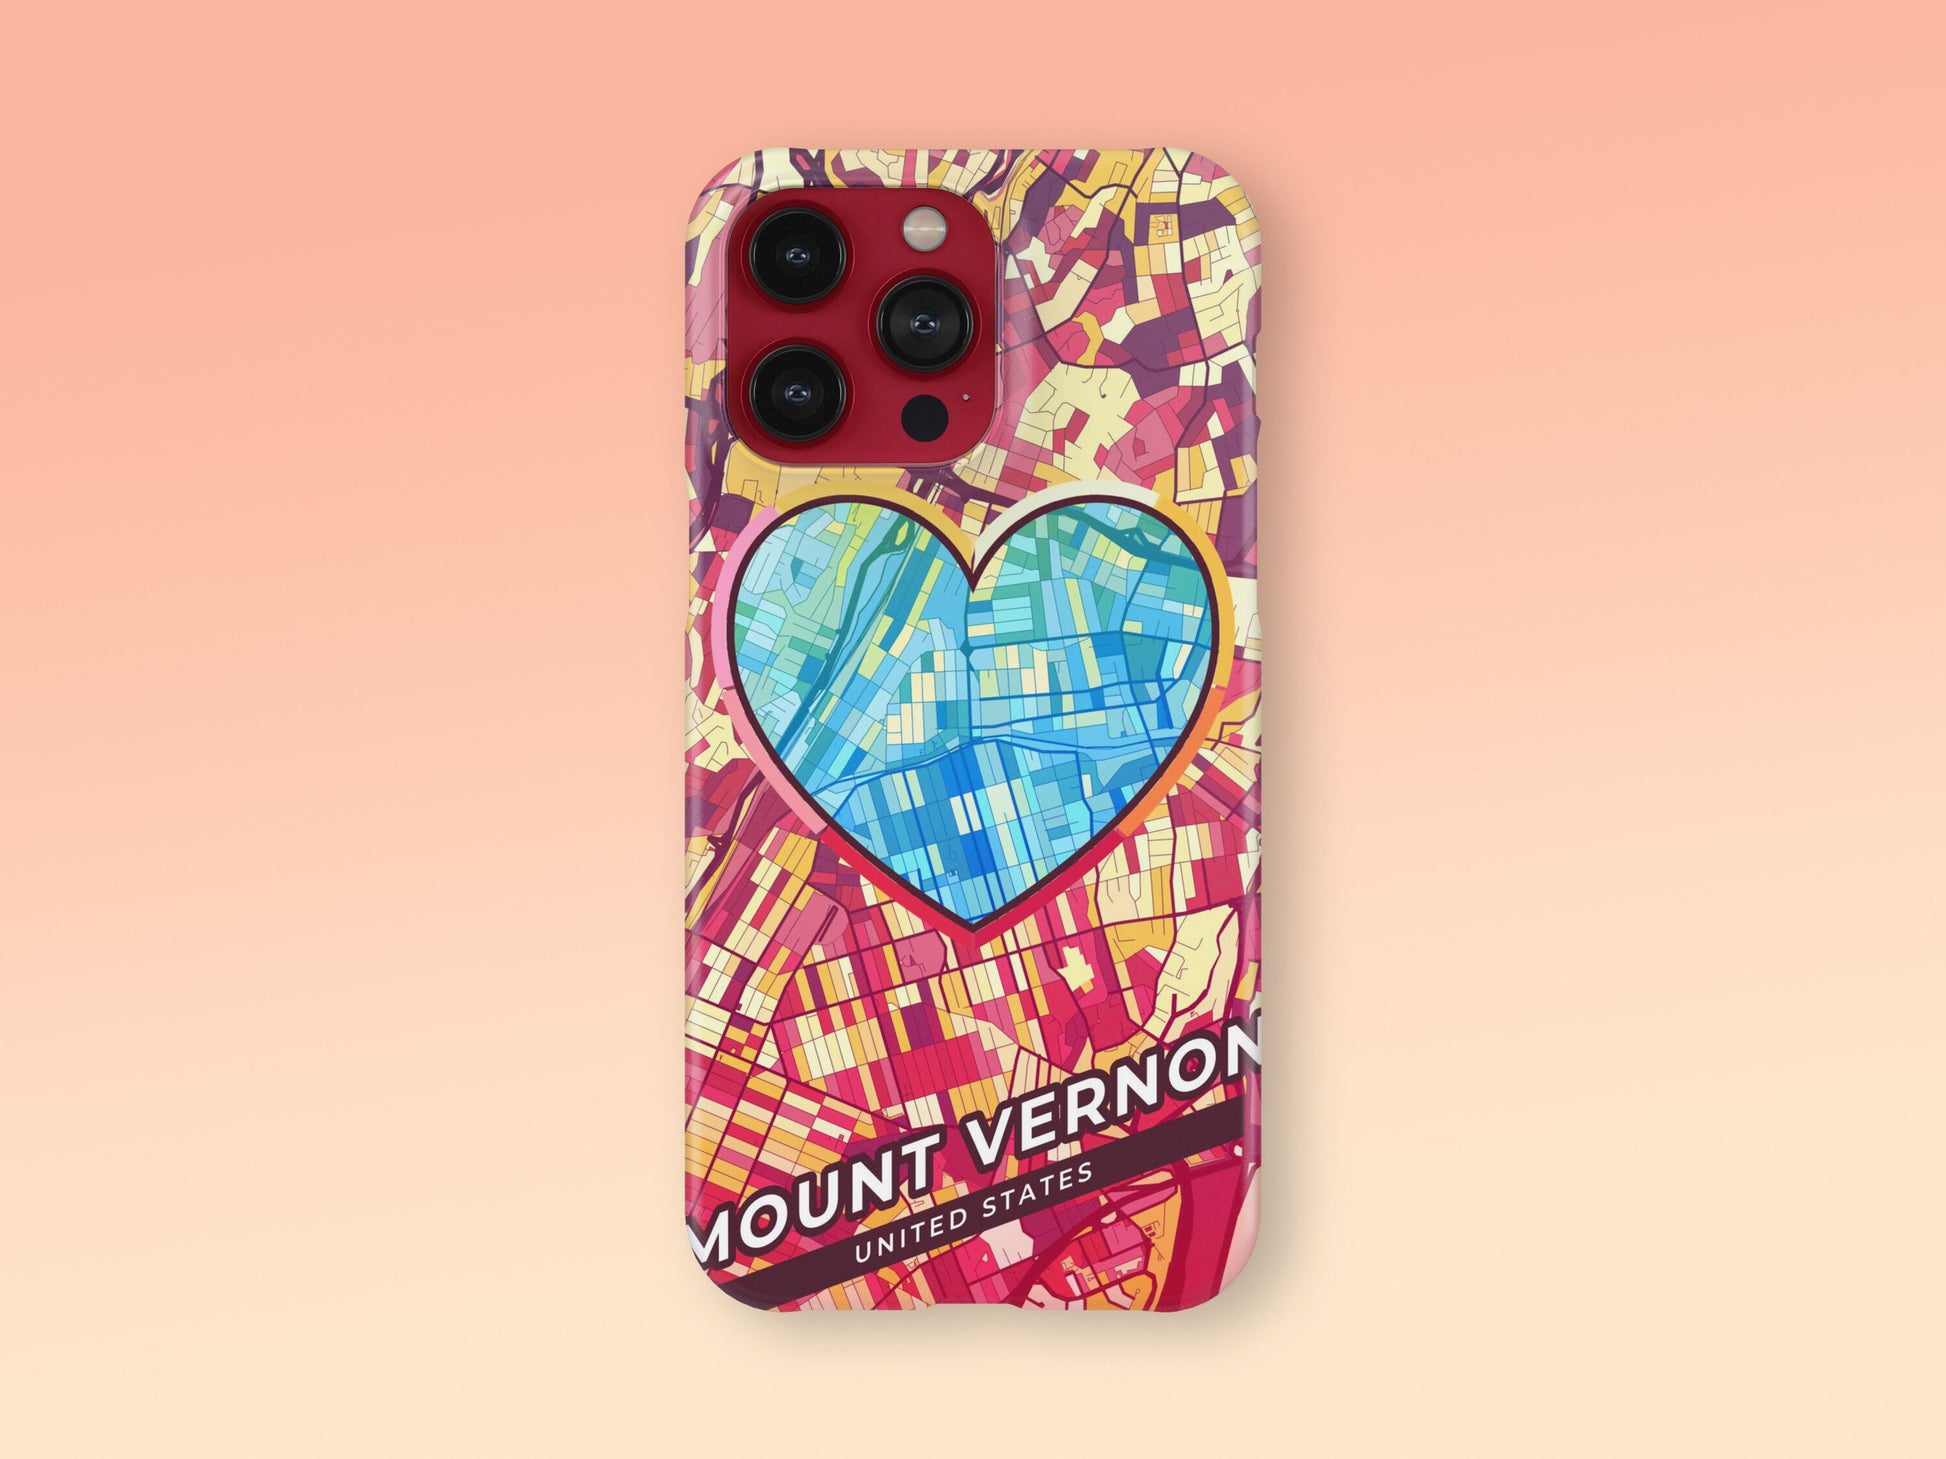 Mount Vernon New York slim phone case with colorful icon 2